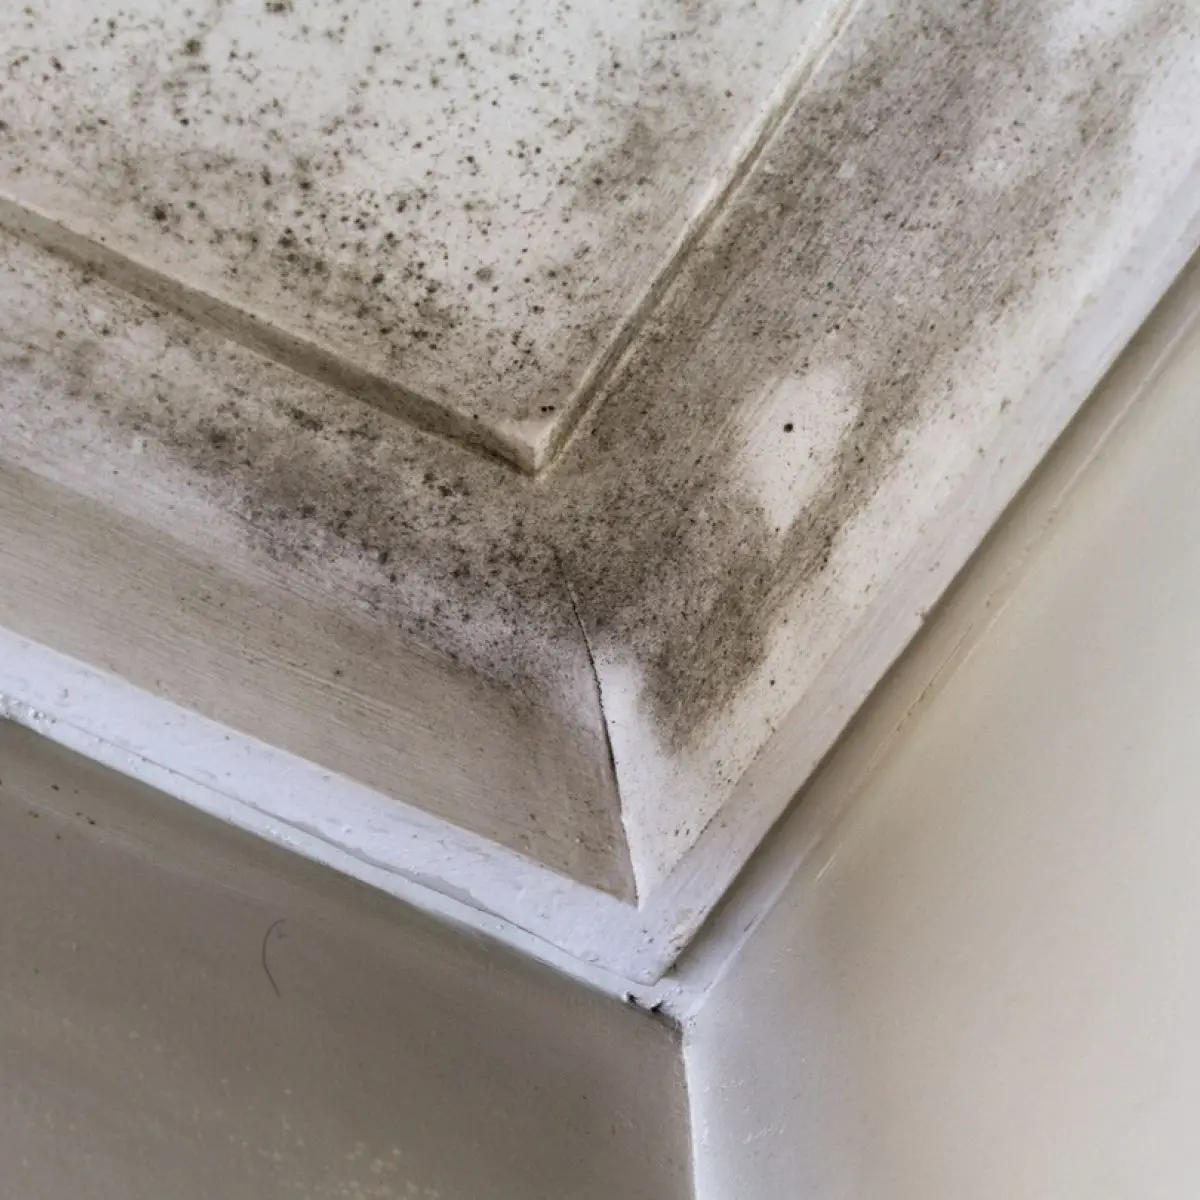 How Do I Get Rid Of Black Mold On My Bathroom Ceiling